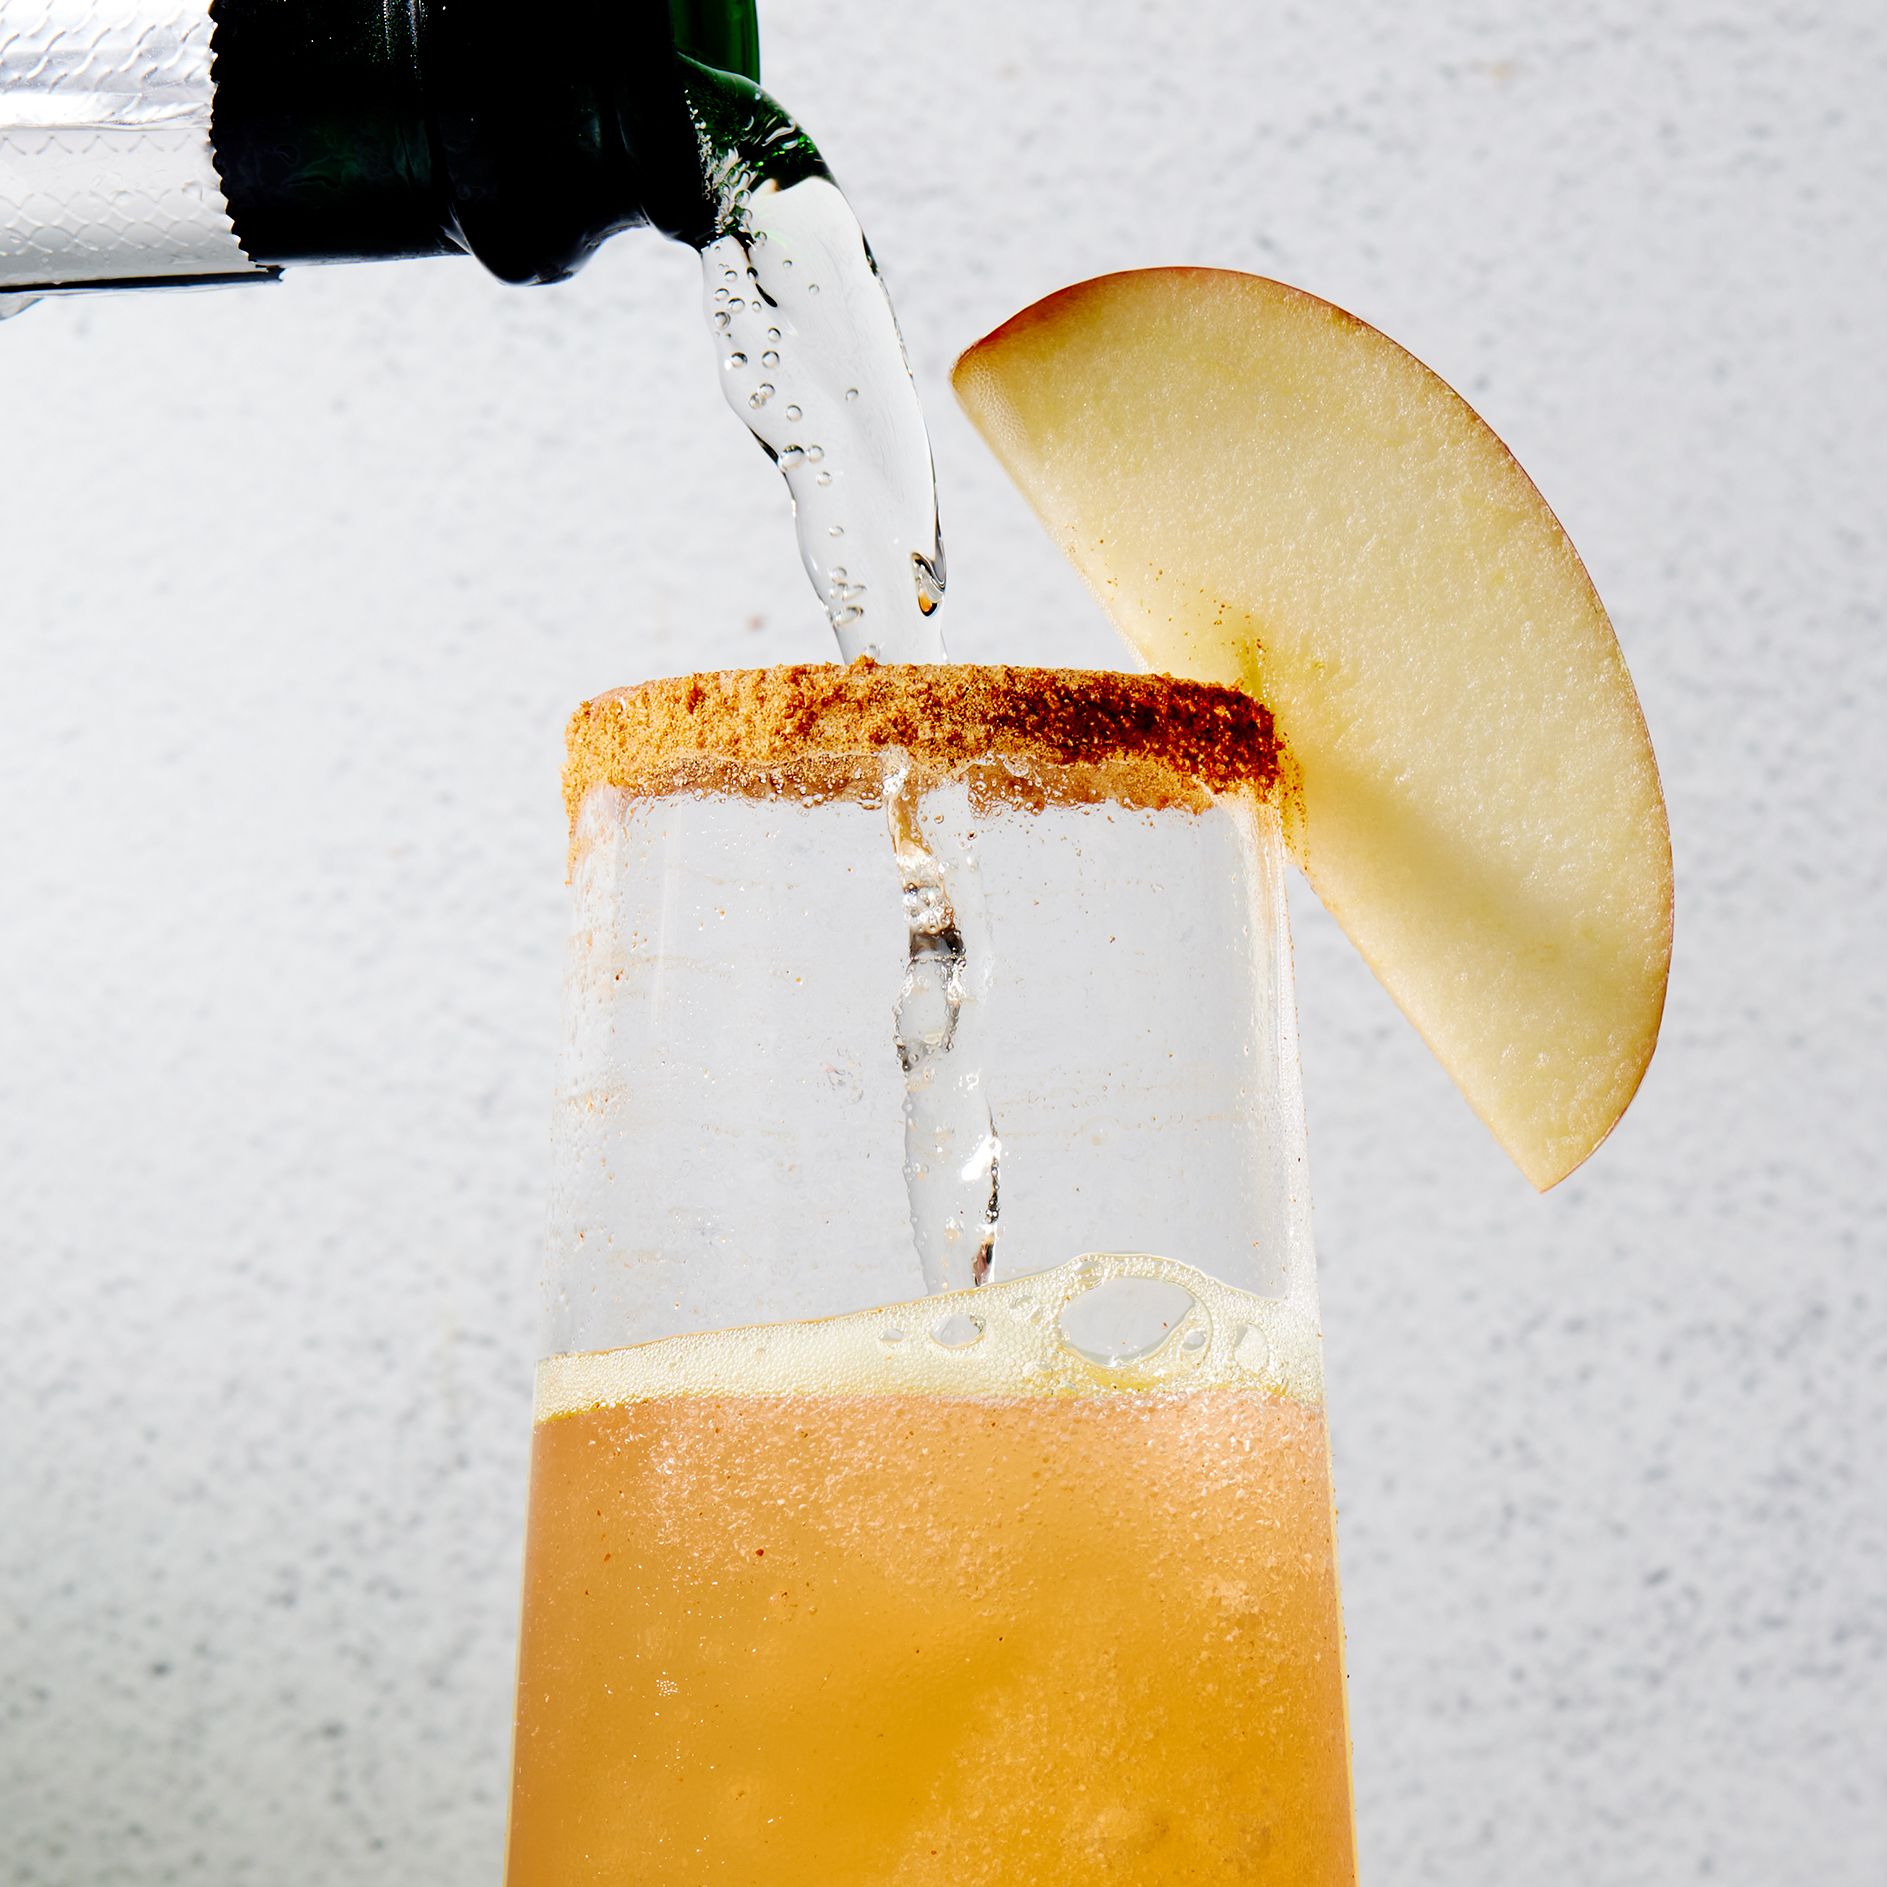 Apple Cider Mimosas Recipe - Diethood